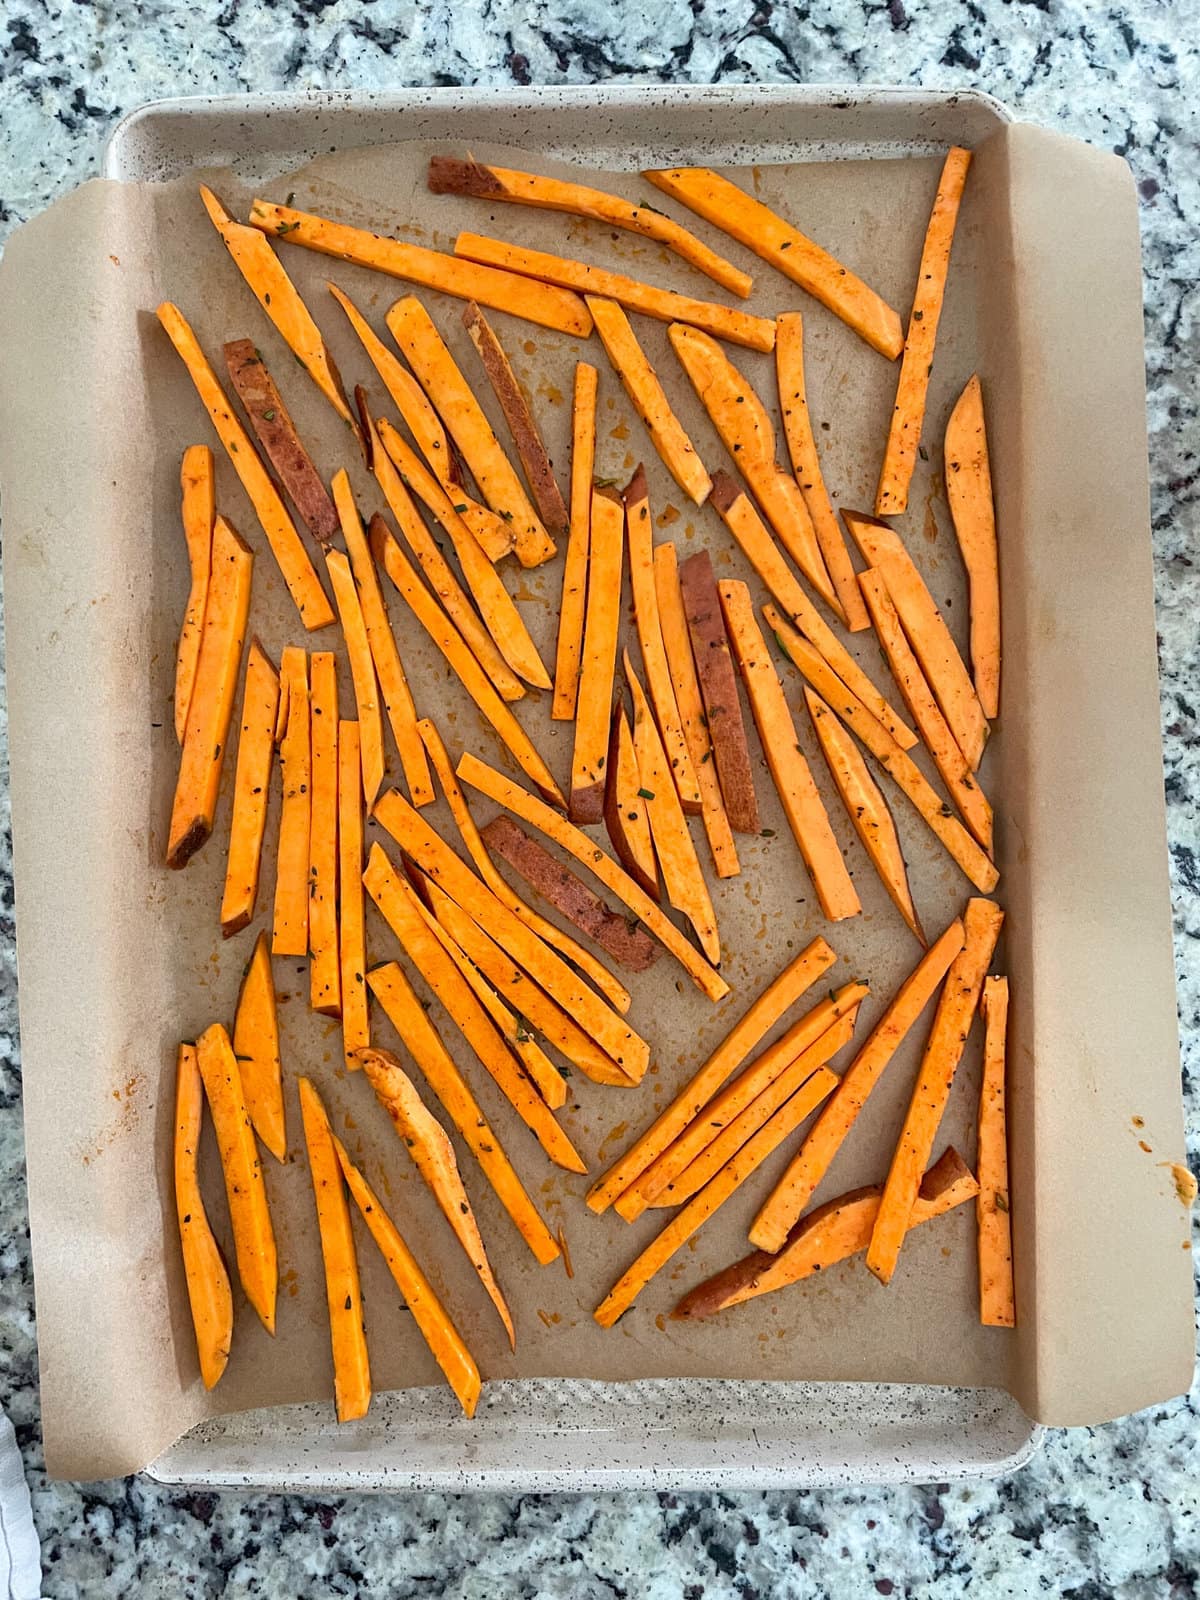 sweet potato fries on a baking sheet